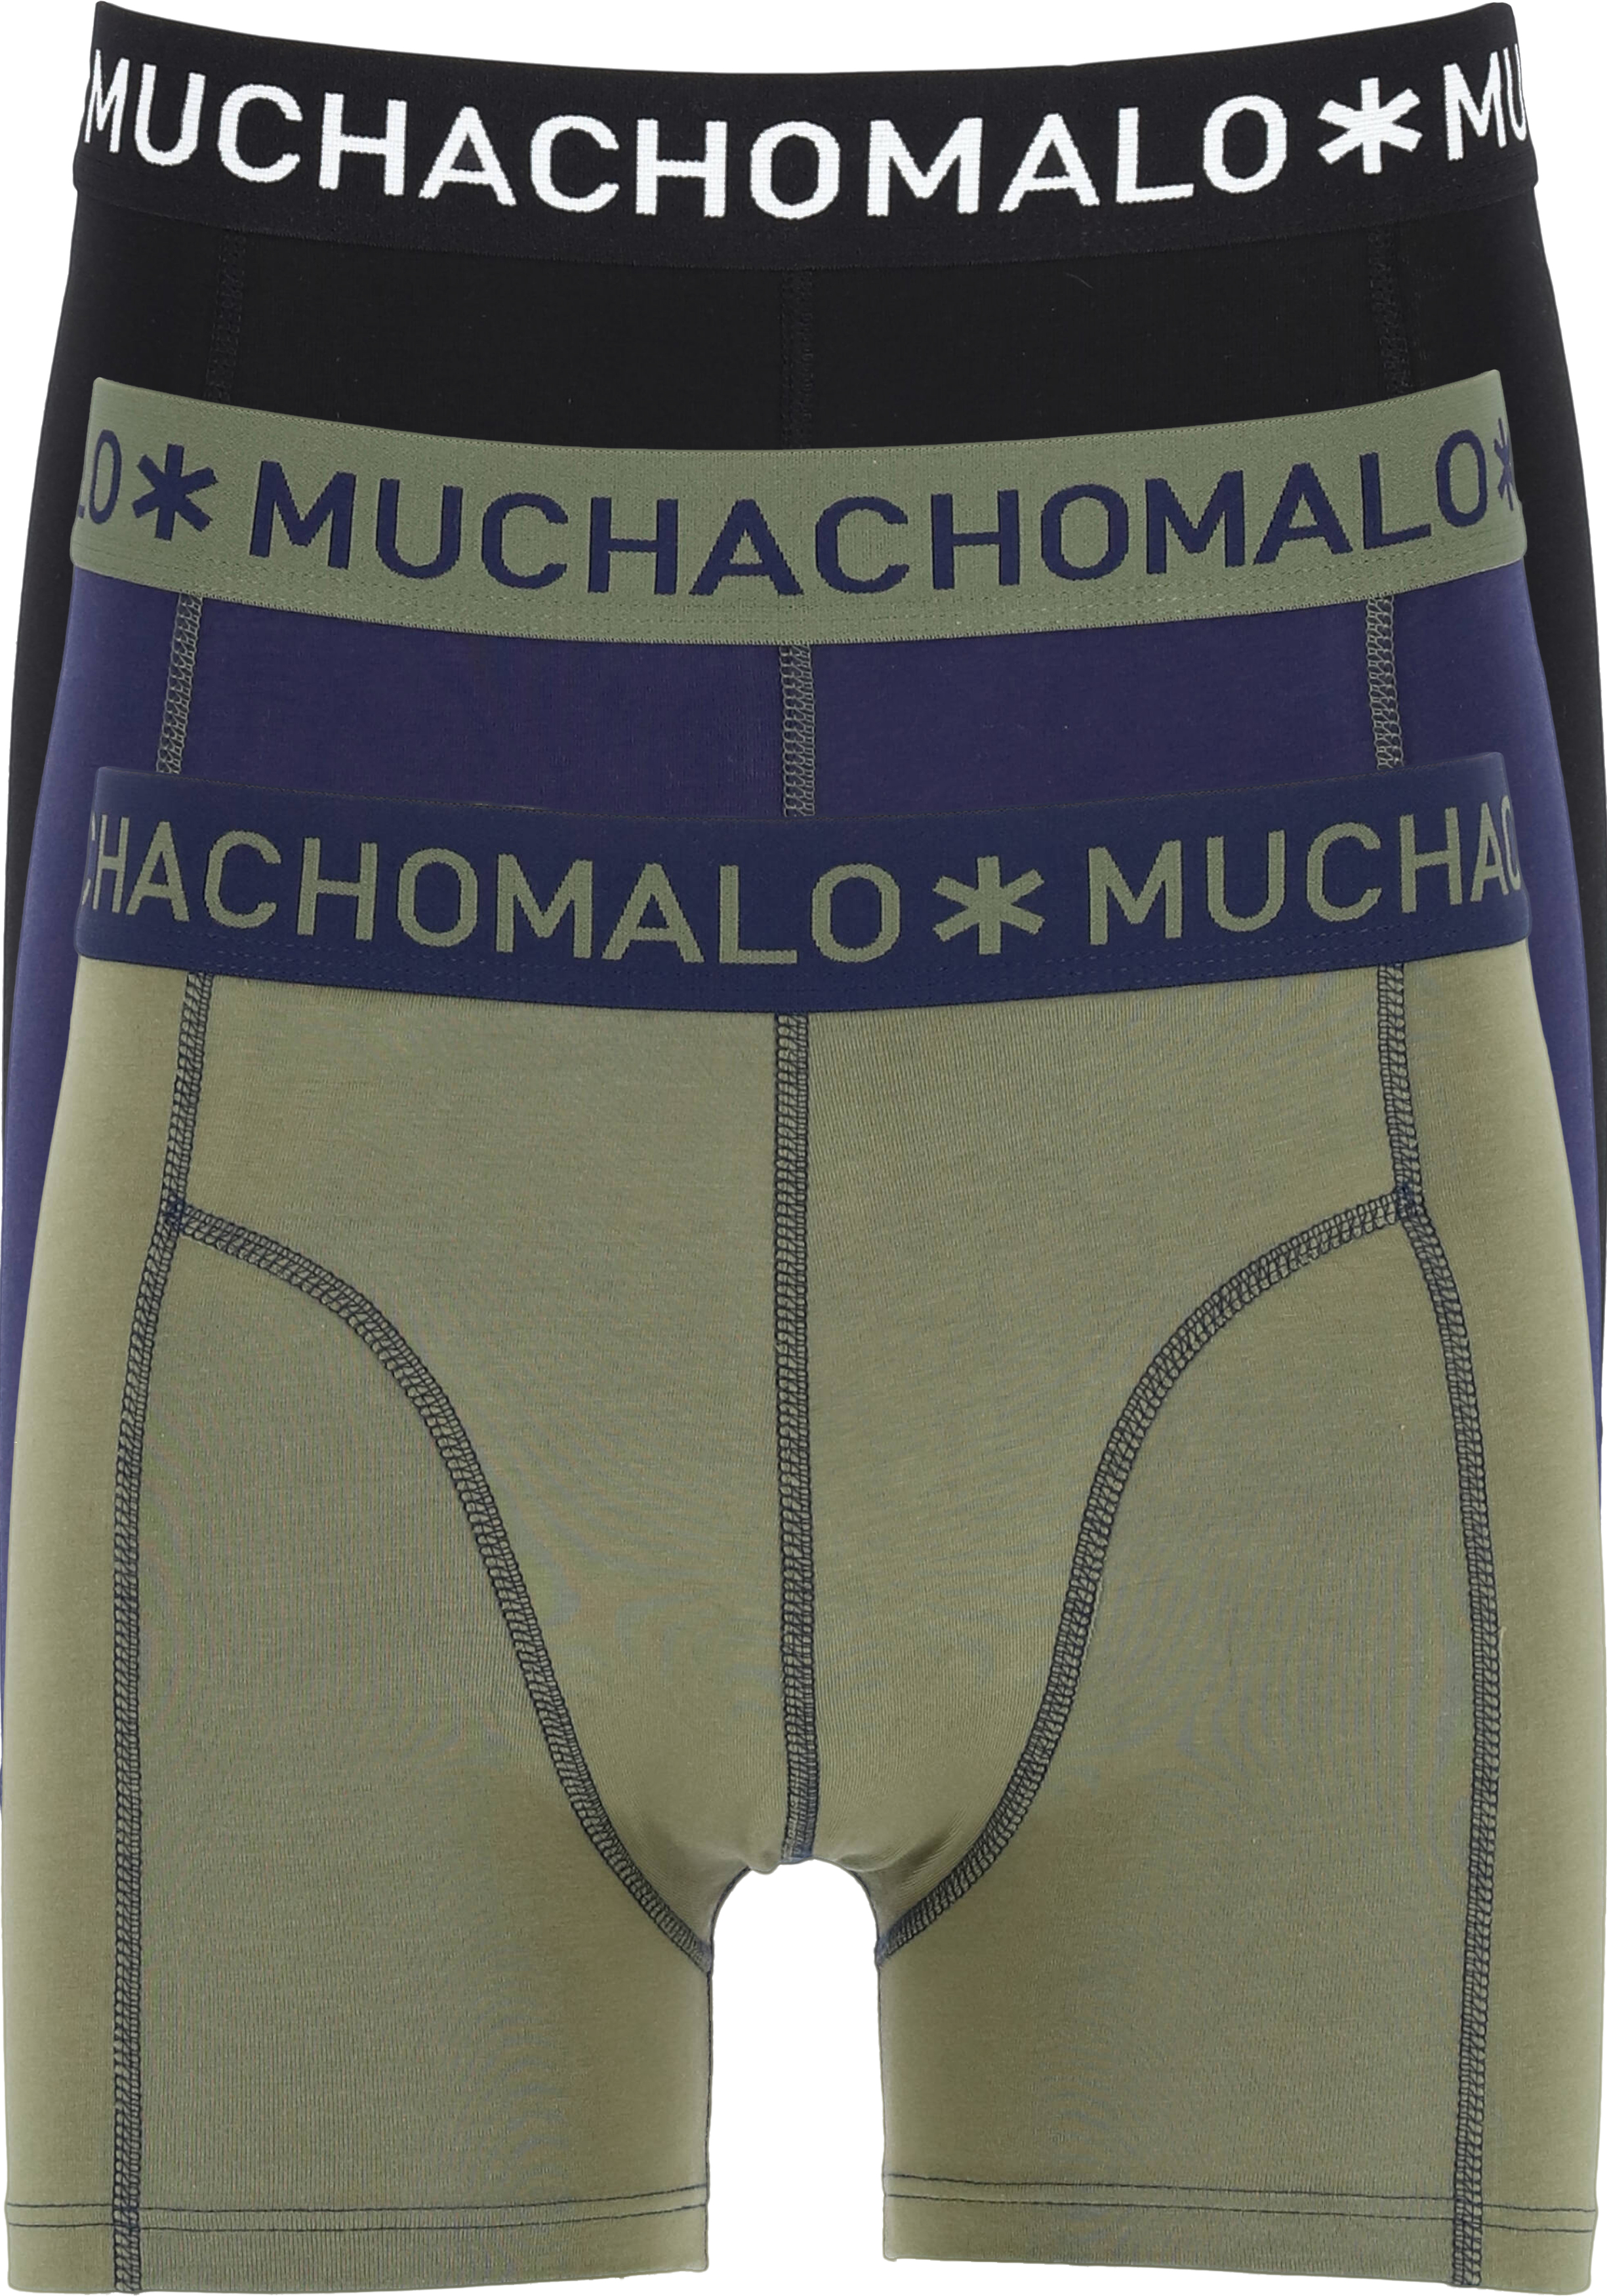 Republiek Beweging Miniatuur Muchachomalo boxershorts, 3-pack, blauw, groen, zwart - Gratis bezorgd